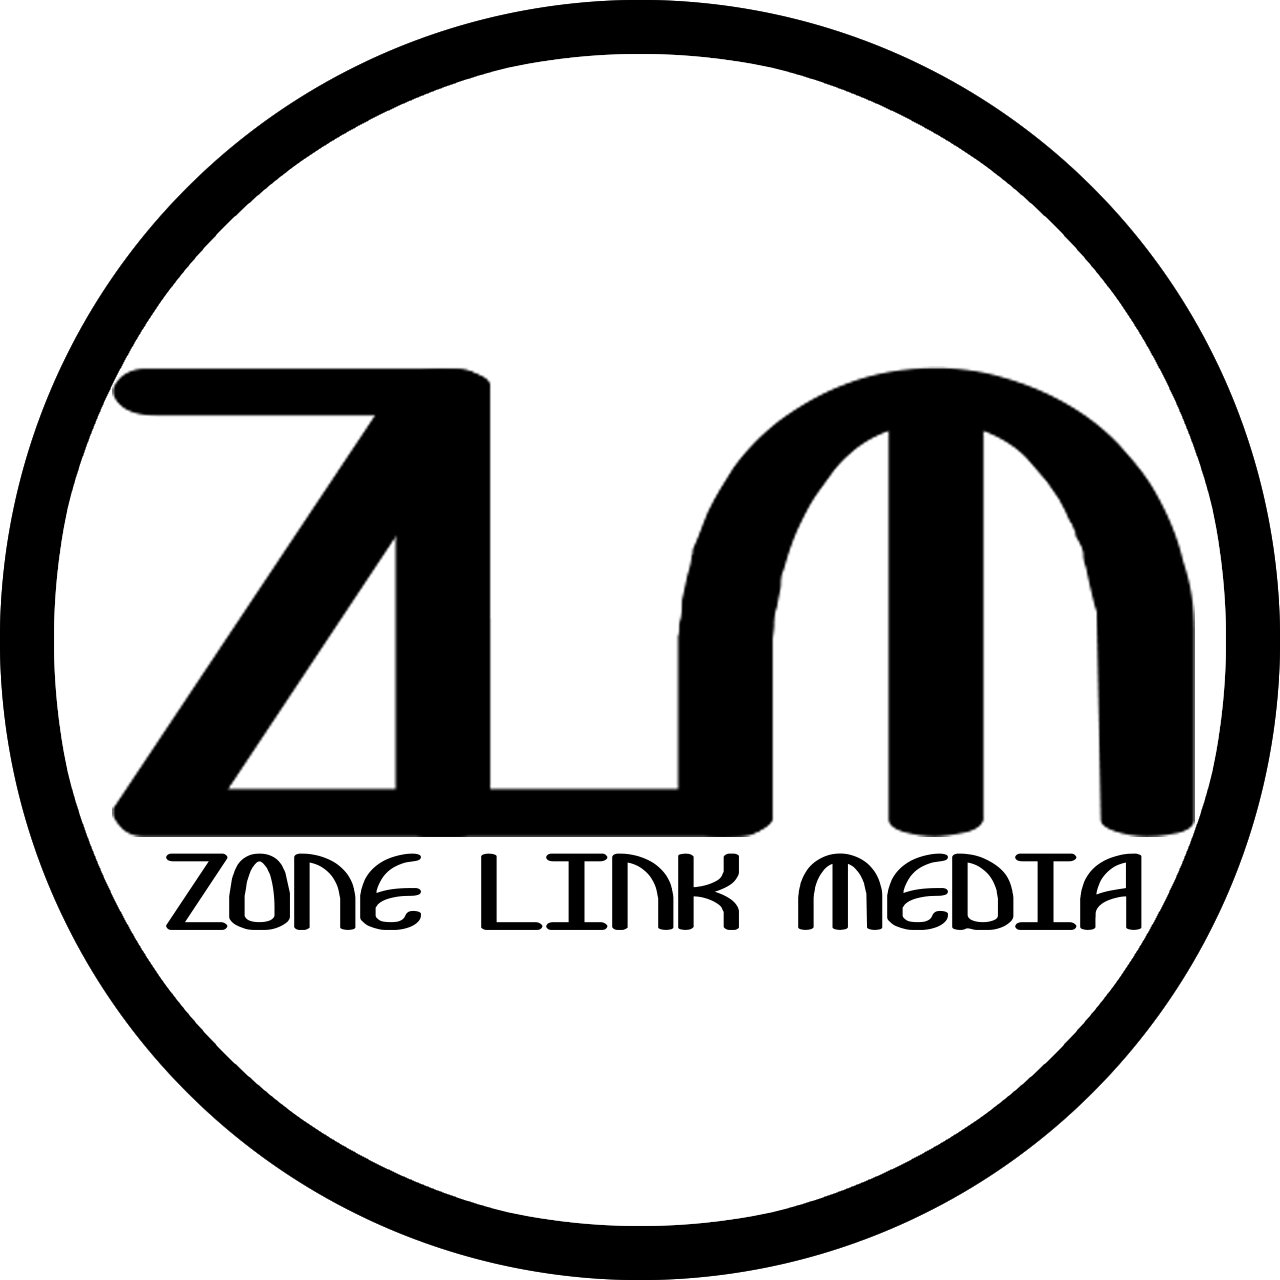 Tide Zone Link Media Reverbnation